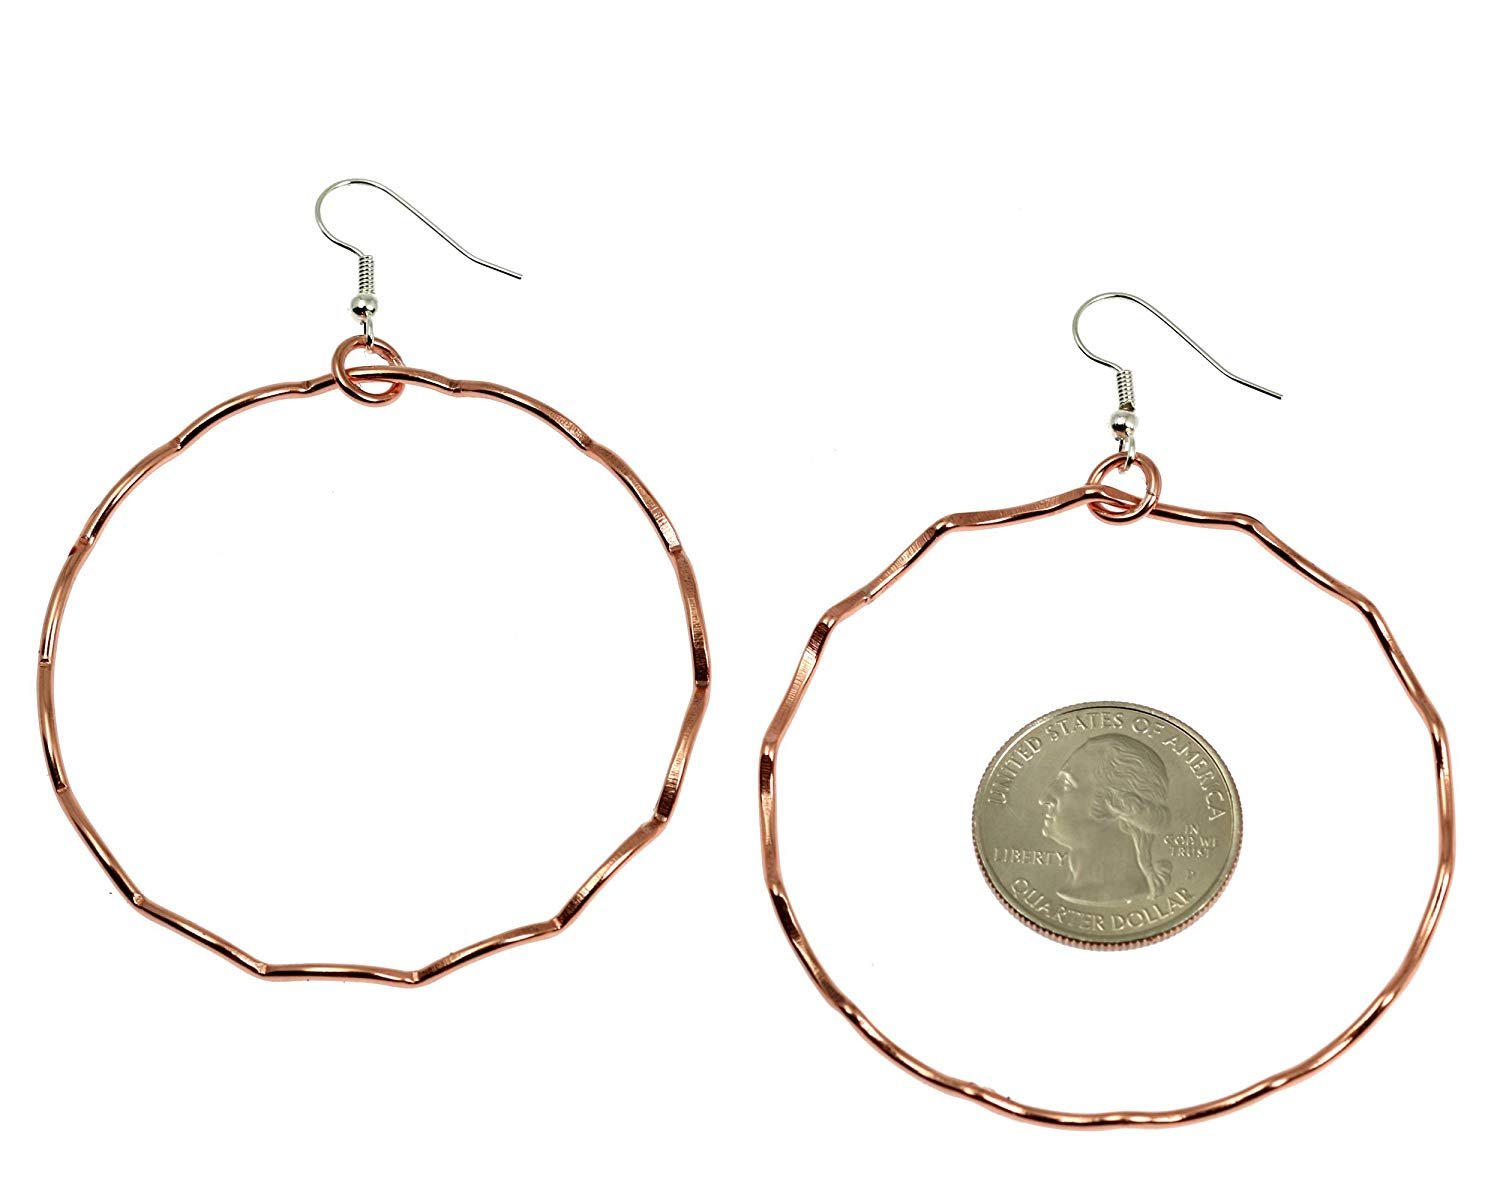 Size of Corrugated Copper Hoop Earrings